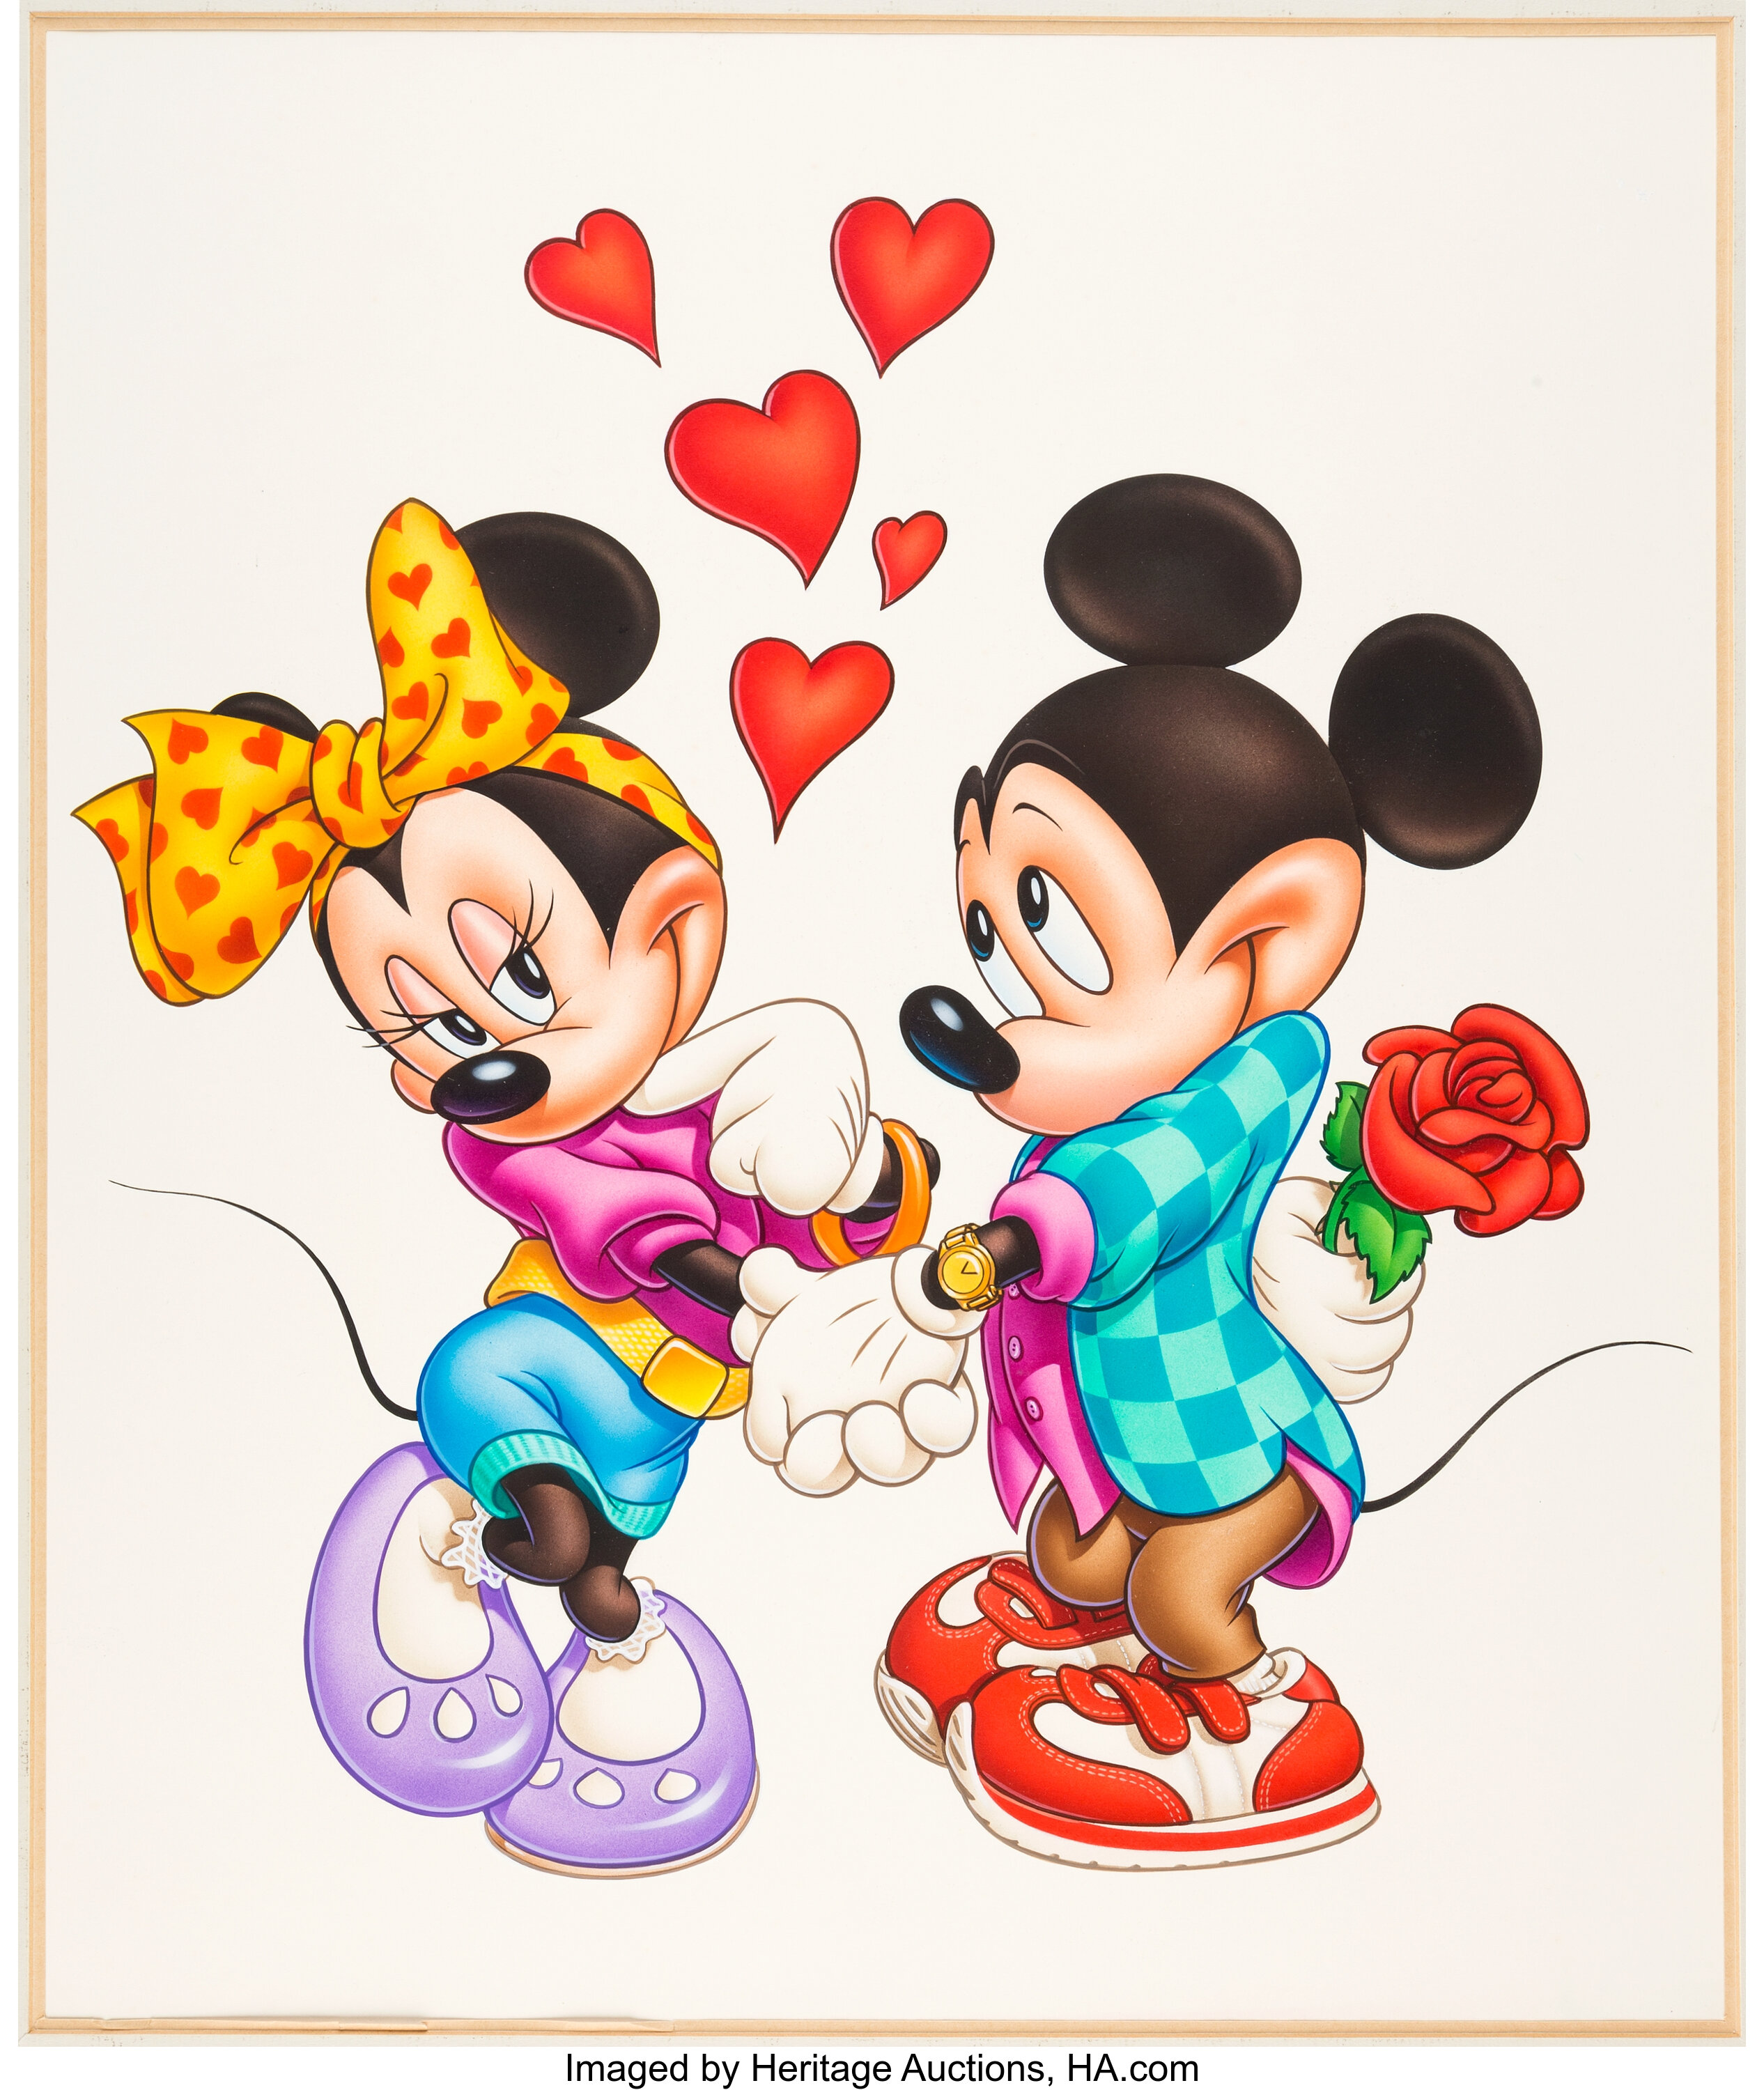 Achterhouden Jasje Verbinding verbroken Mickey and Minnie - Mouse Love Poster Illustration Original Art | Lot  #97036 | Heritage Auctions